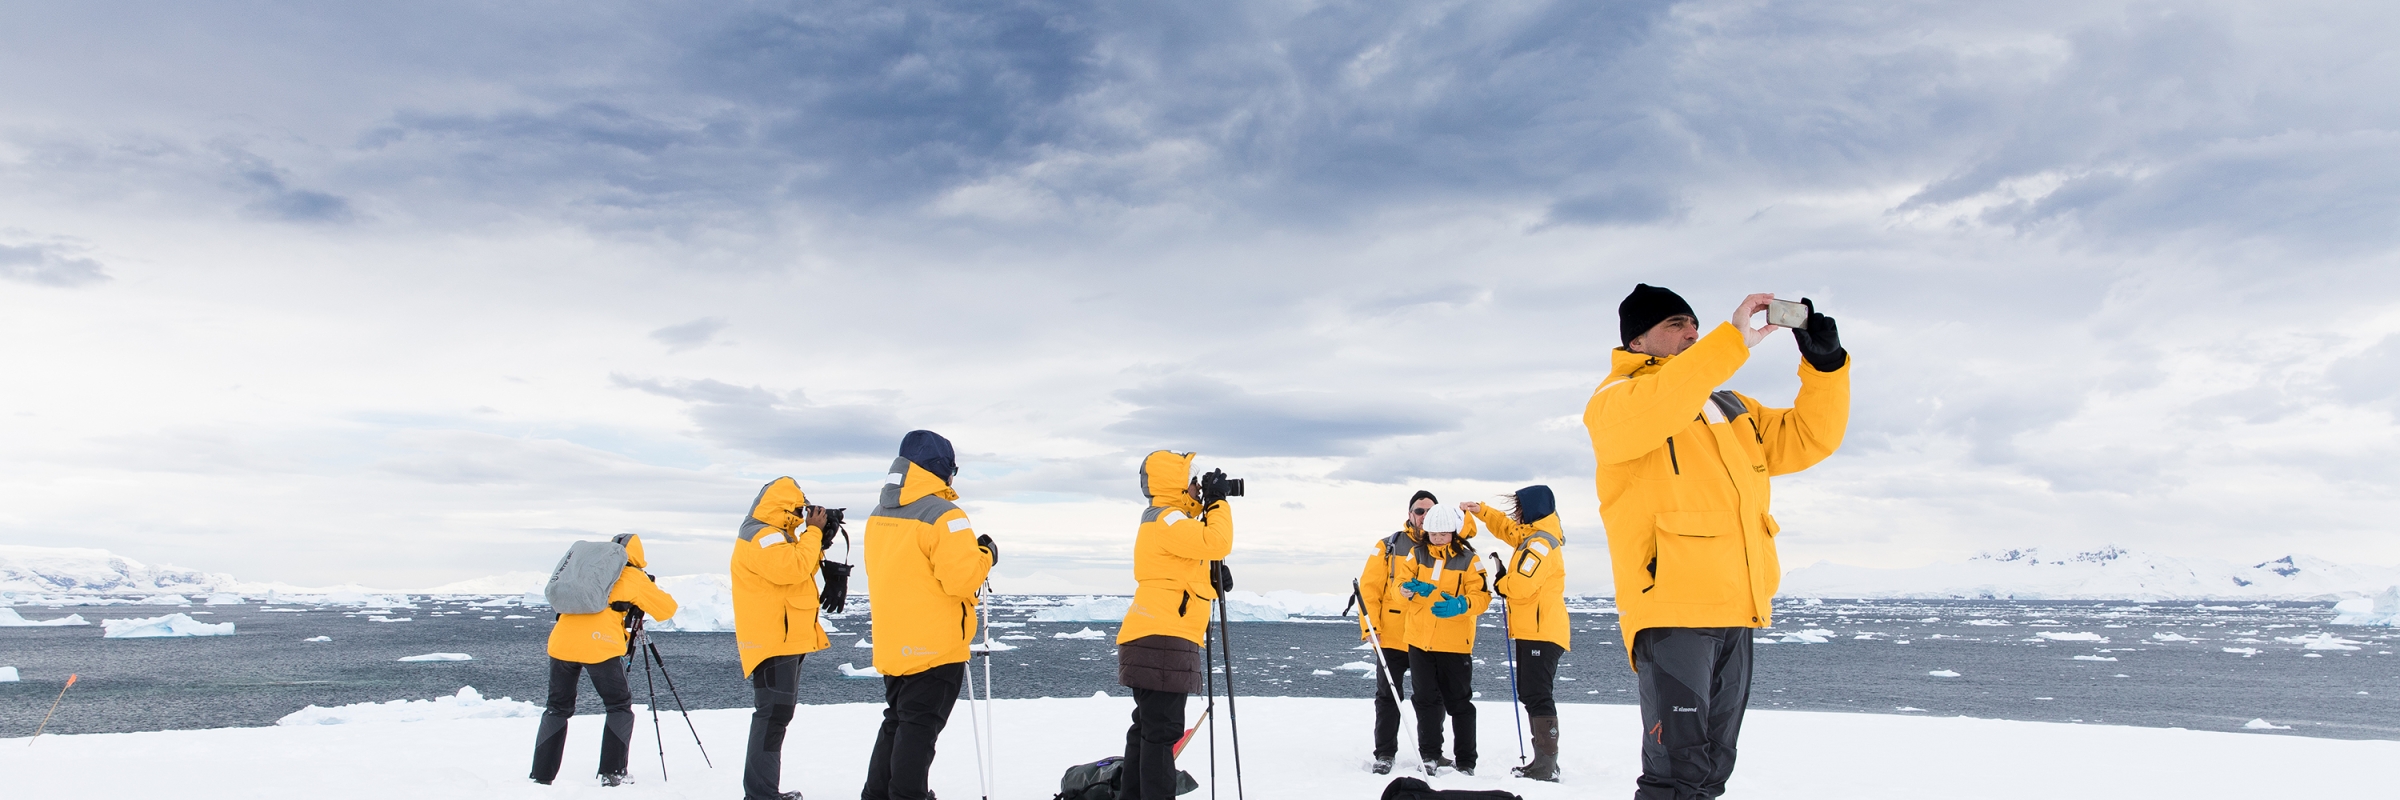 Guests enjoying Antarctic landscapes on a landing at Portal Point. Photo by Sam Edmonds.